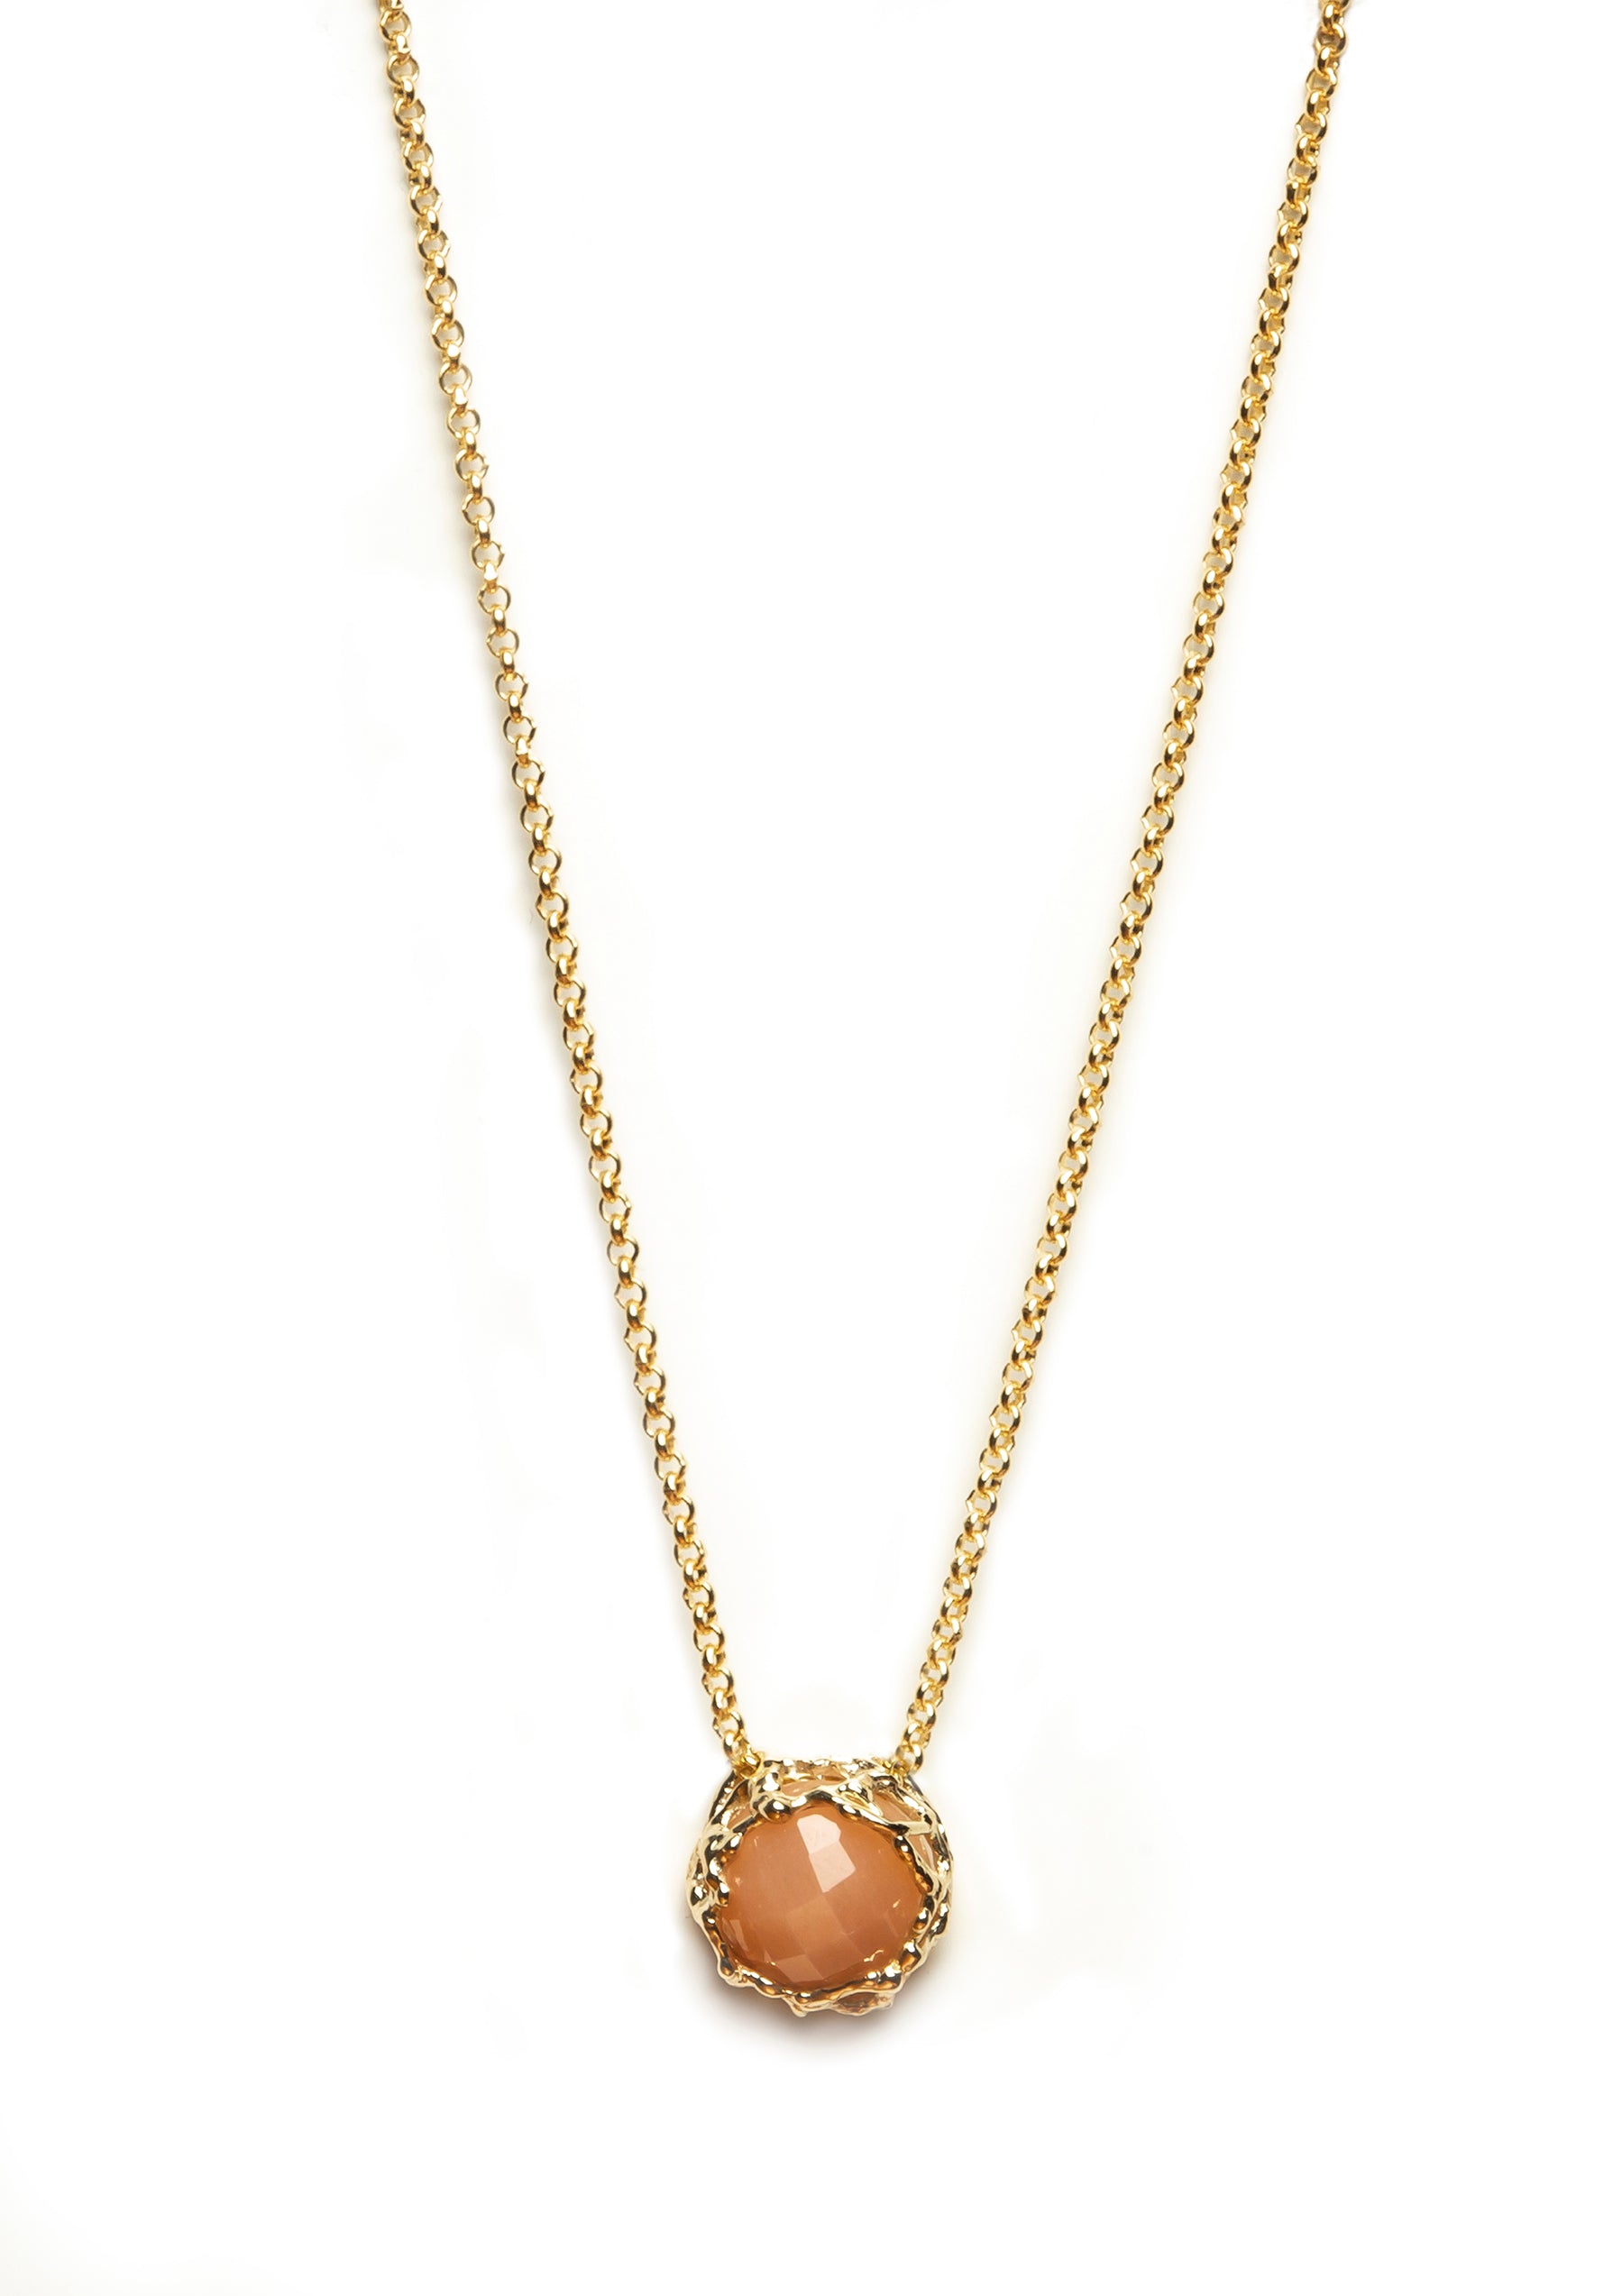 Bon Bon Royal pendant with gold-plated chain